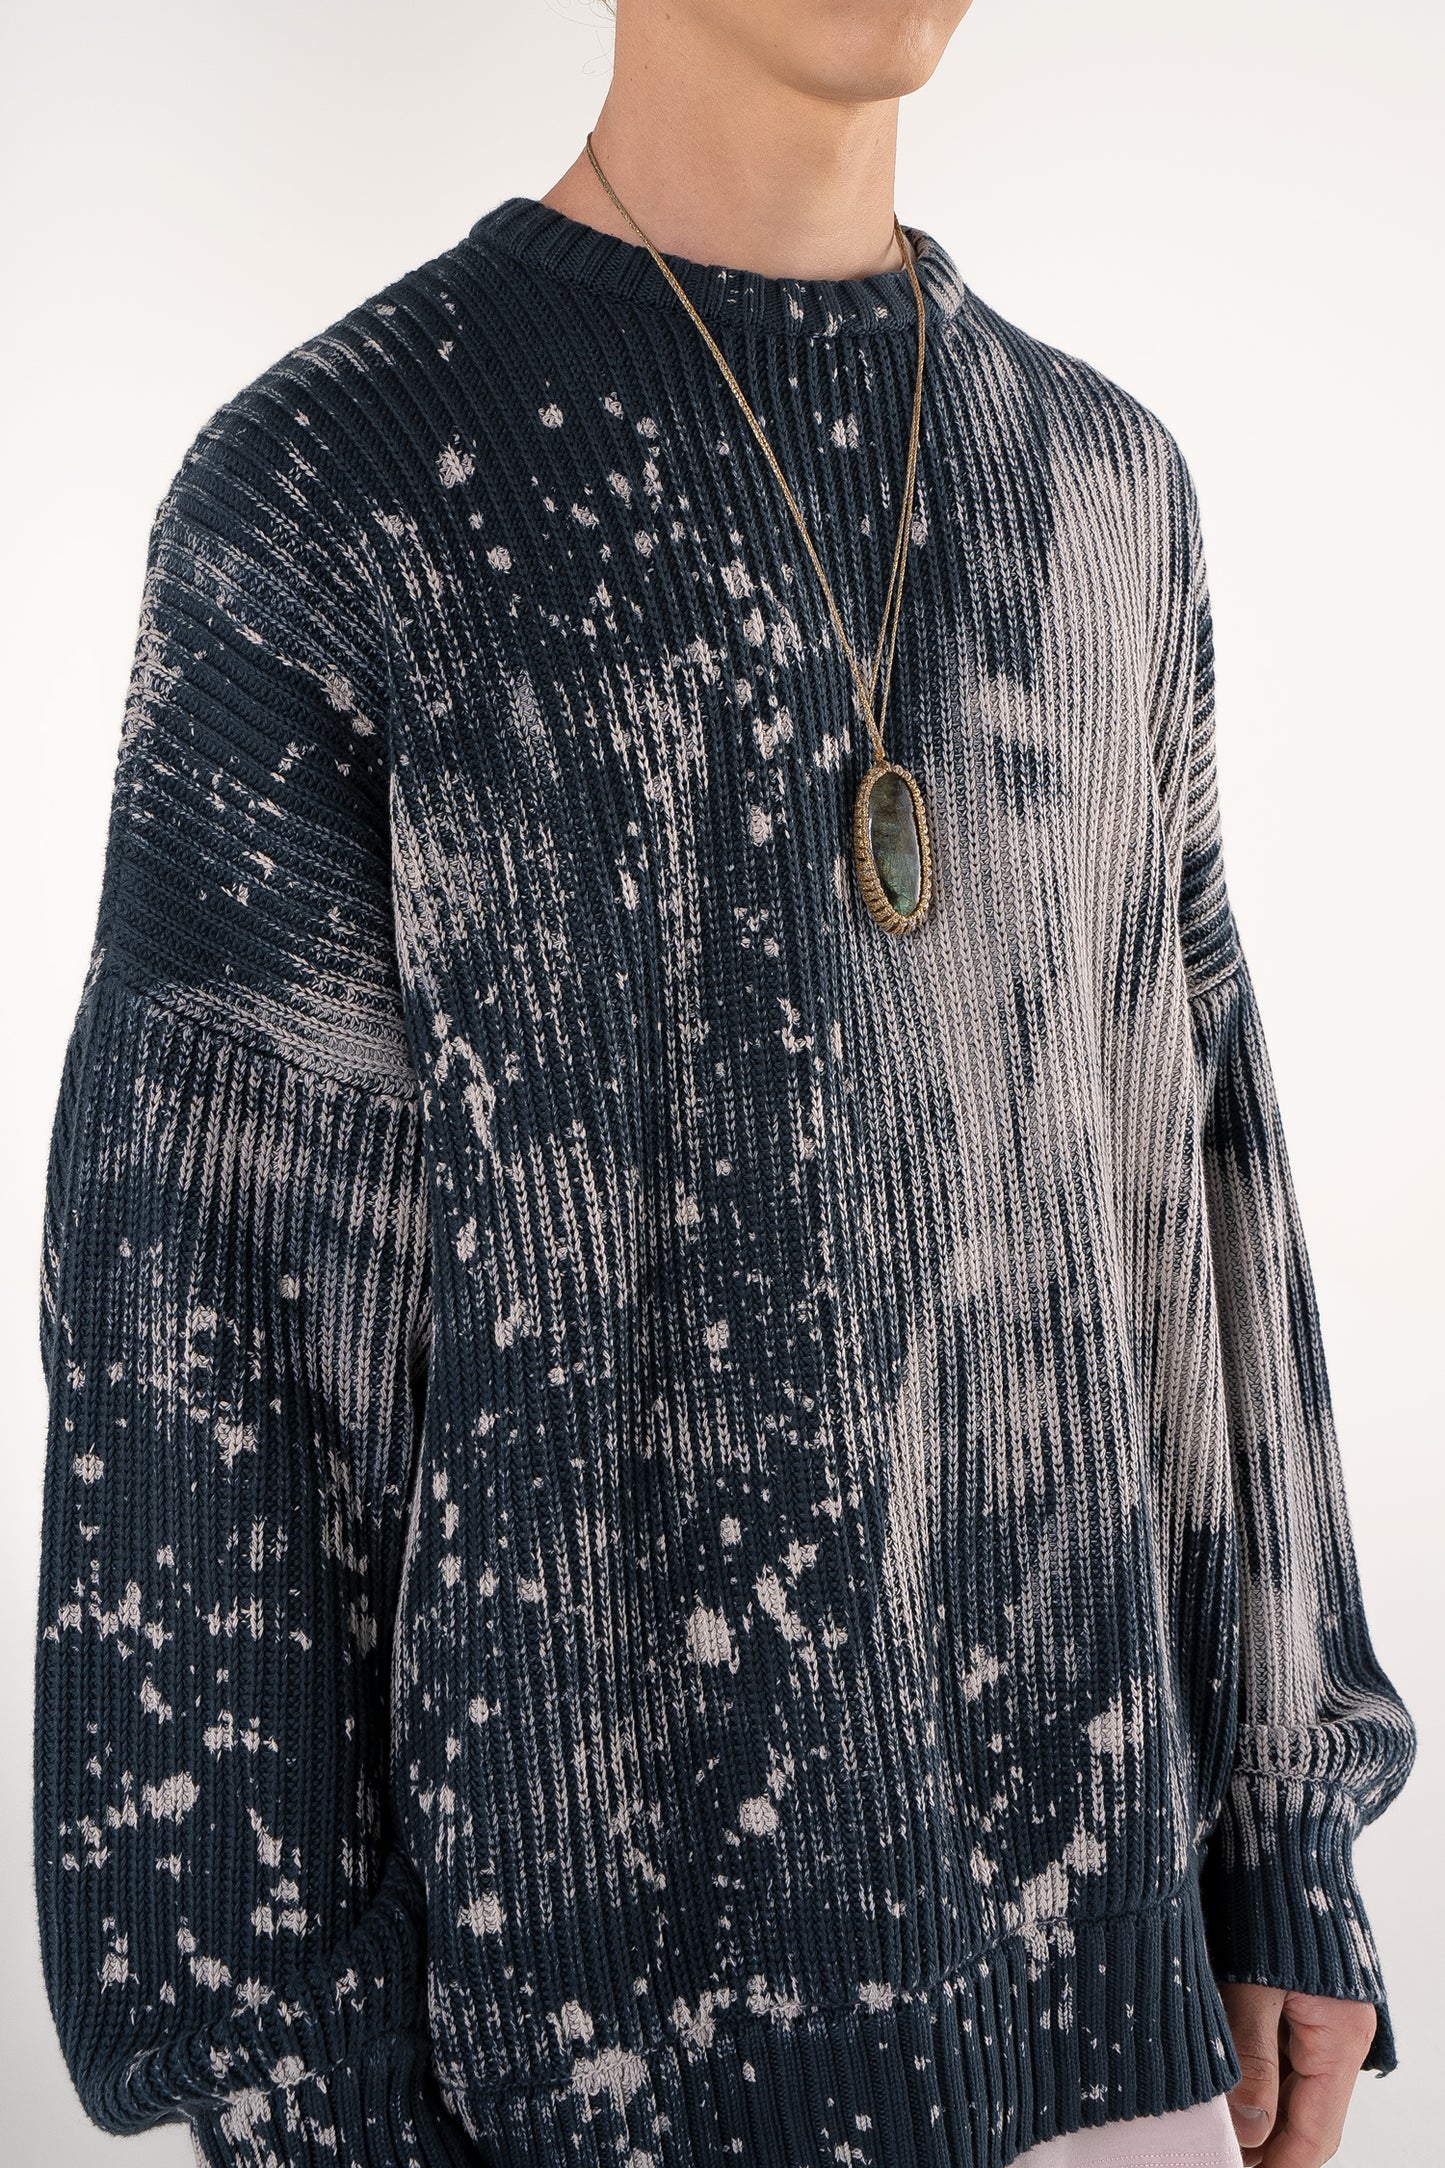 Handknitted Cotton Sweater - Bleached Tie Dye